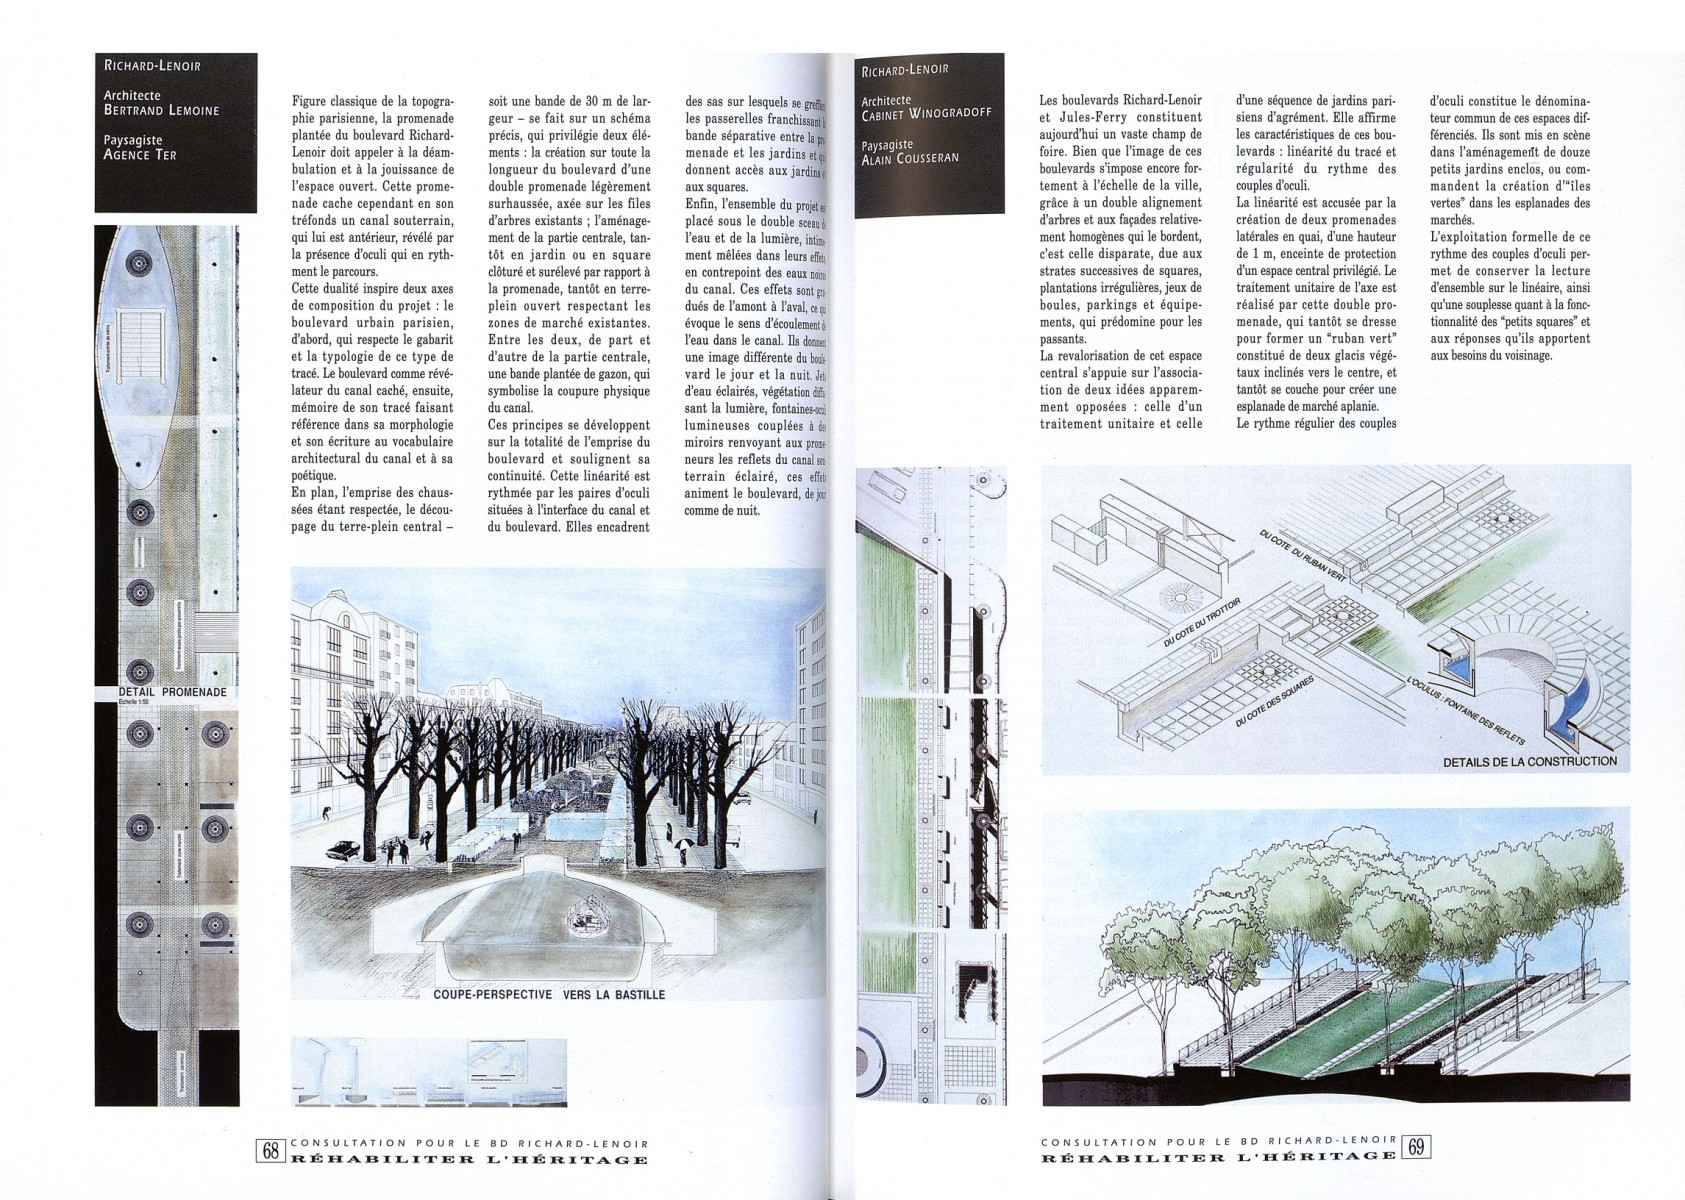 Consultation boulevard Richard Lenoir, architectes : Bertrand Lemoine et Cabinet Winogradoff